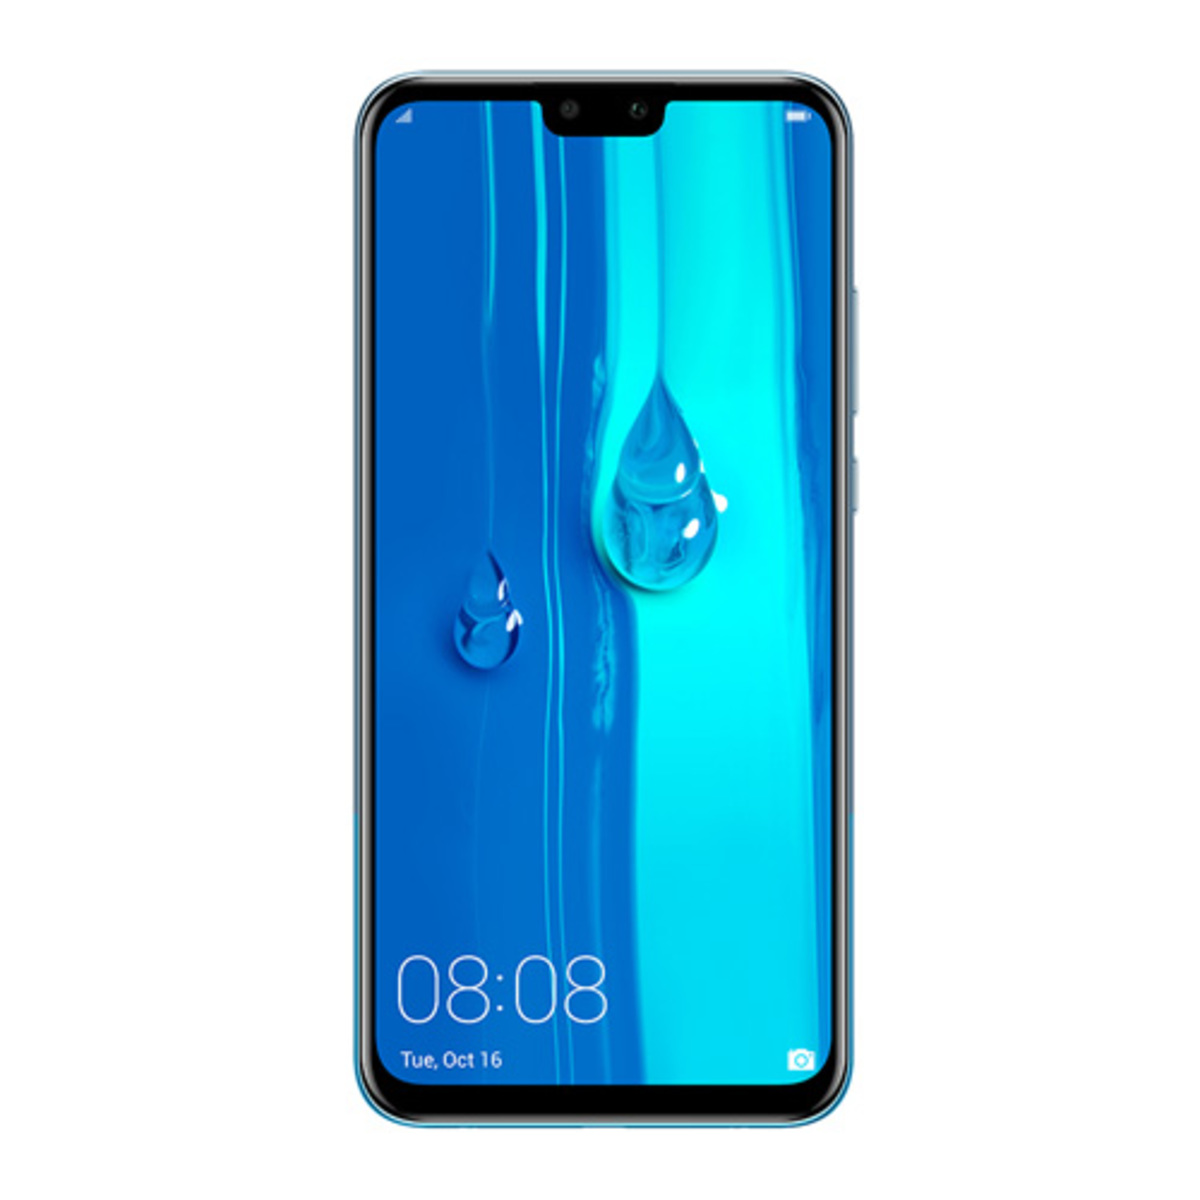 Huawei Y9-2019 64GB Purple